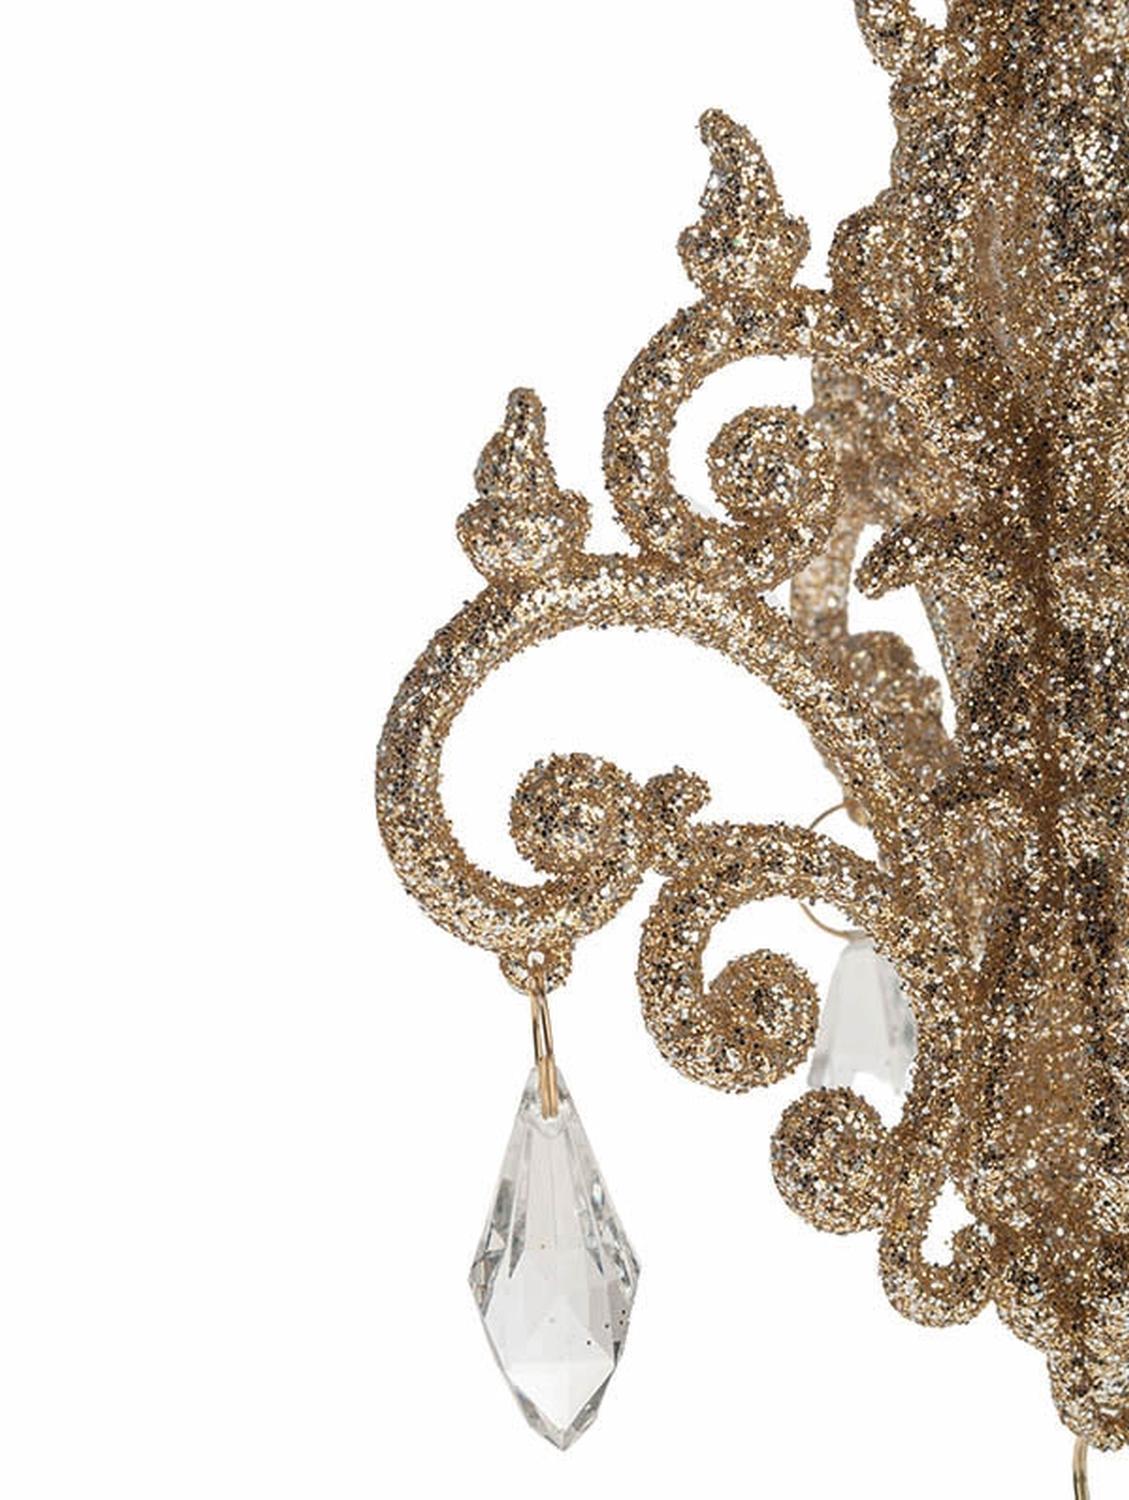 Deko Ornament 'Lüster' aus Acryl Material, 14 cm, champagner-camelie